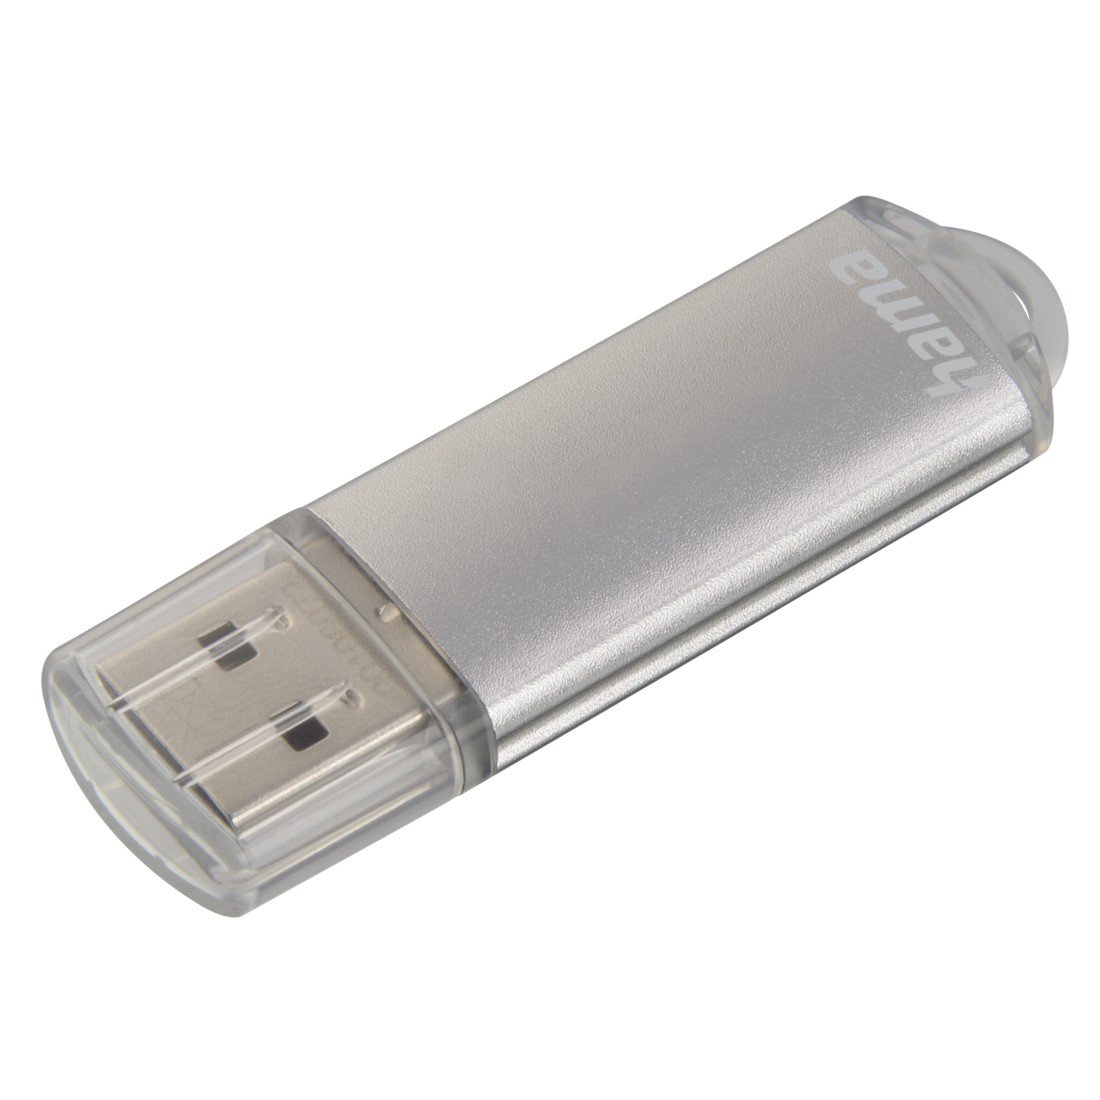 00108072 Hama "Laeta" USB Flash Drive, USB 2.0, 128 GB, 10 MB/s, silver